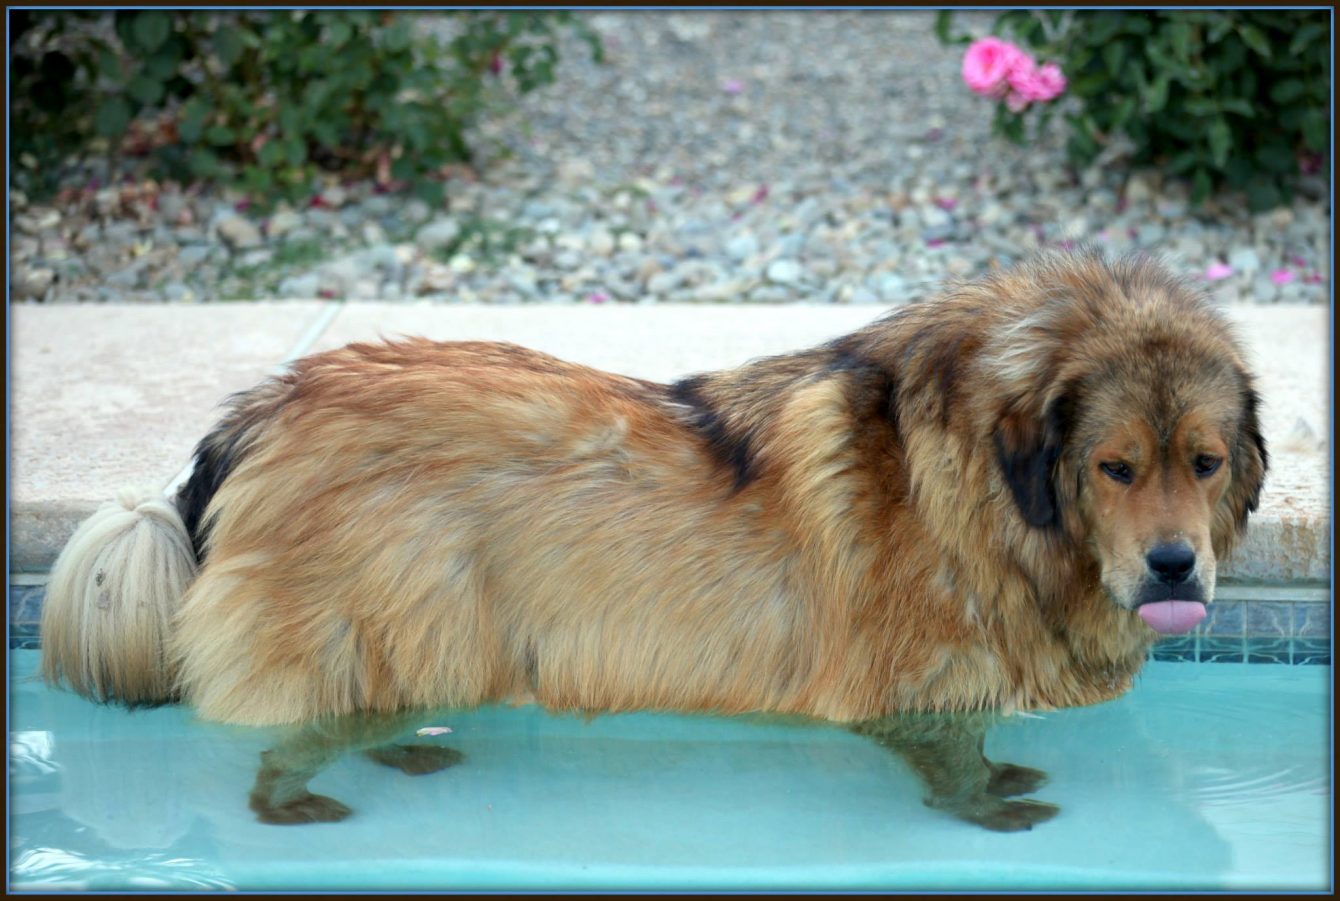 Tibetan Mastiff puppies for sale